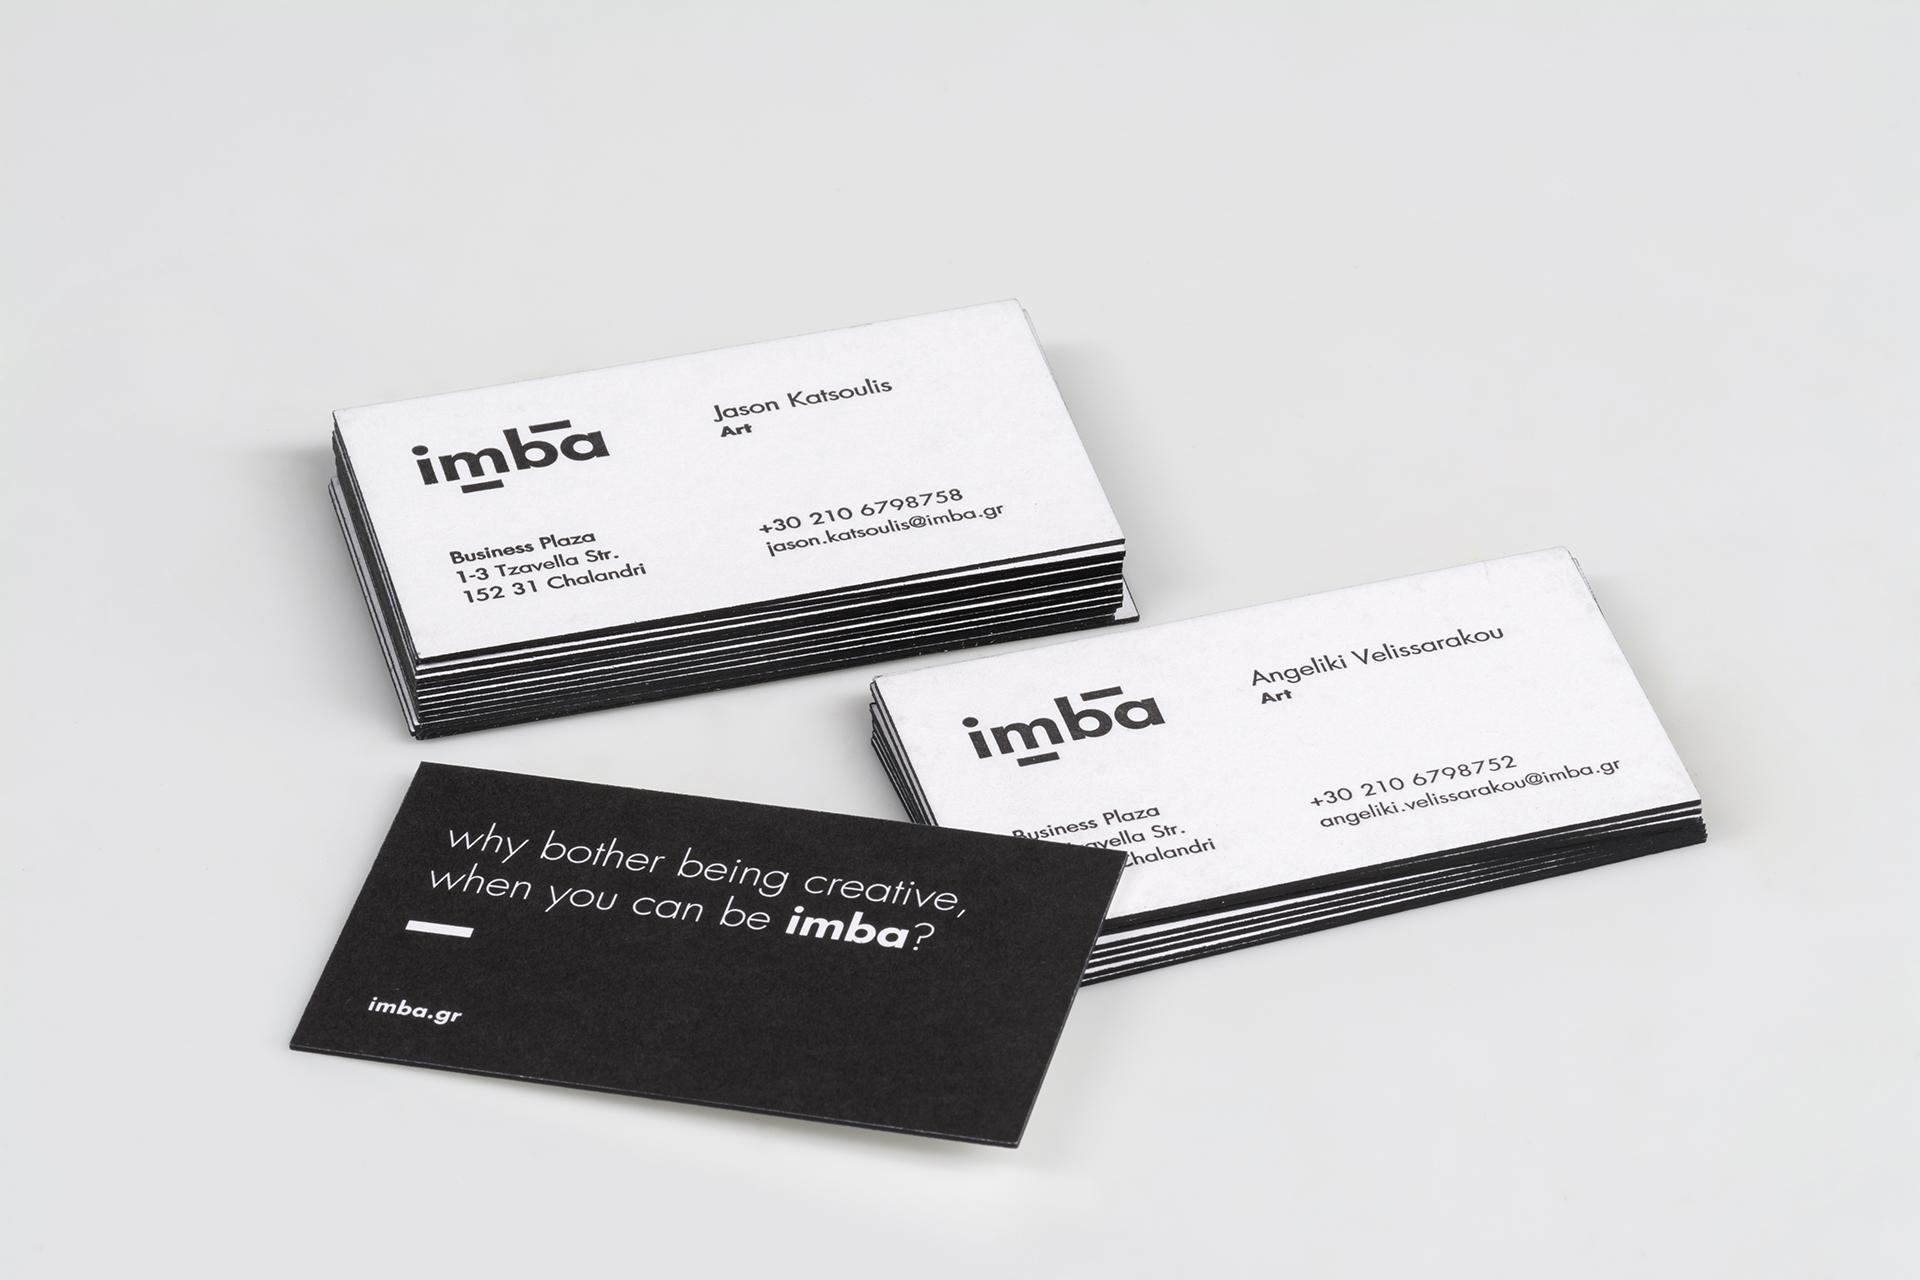 Imba business cards